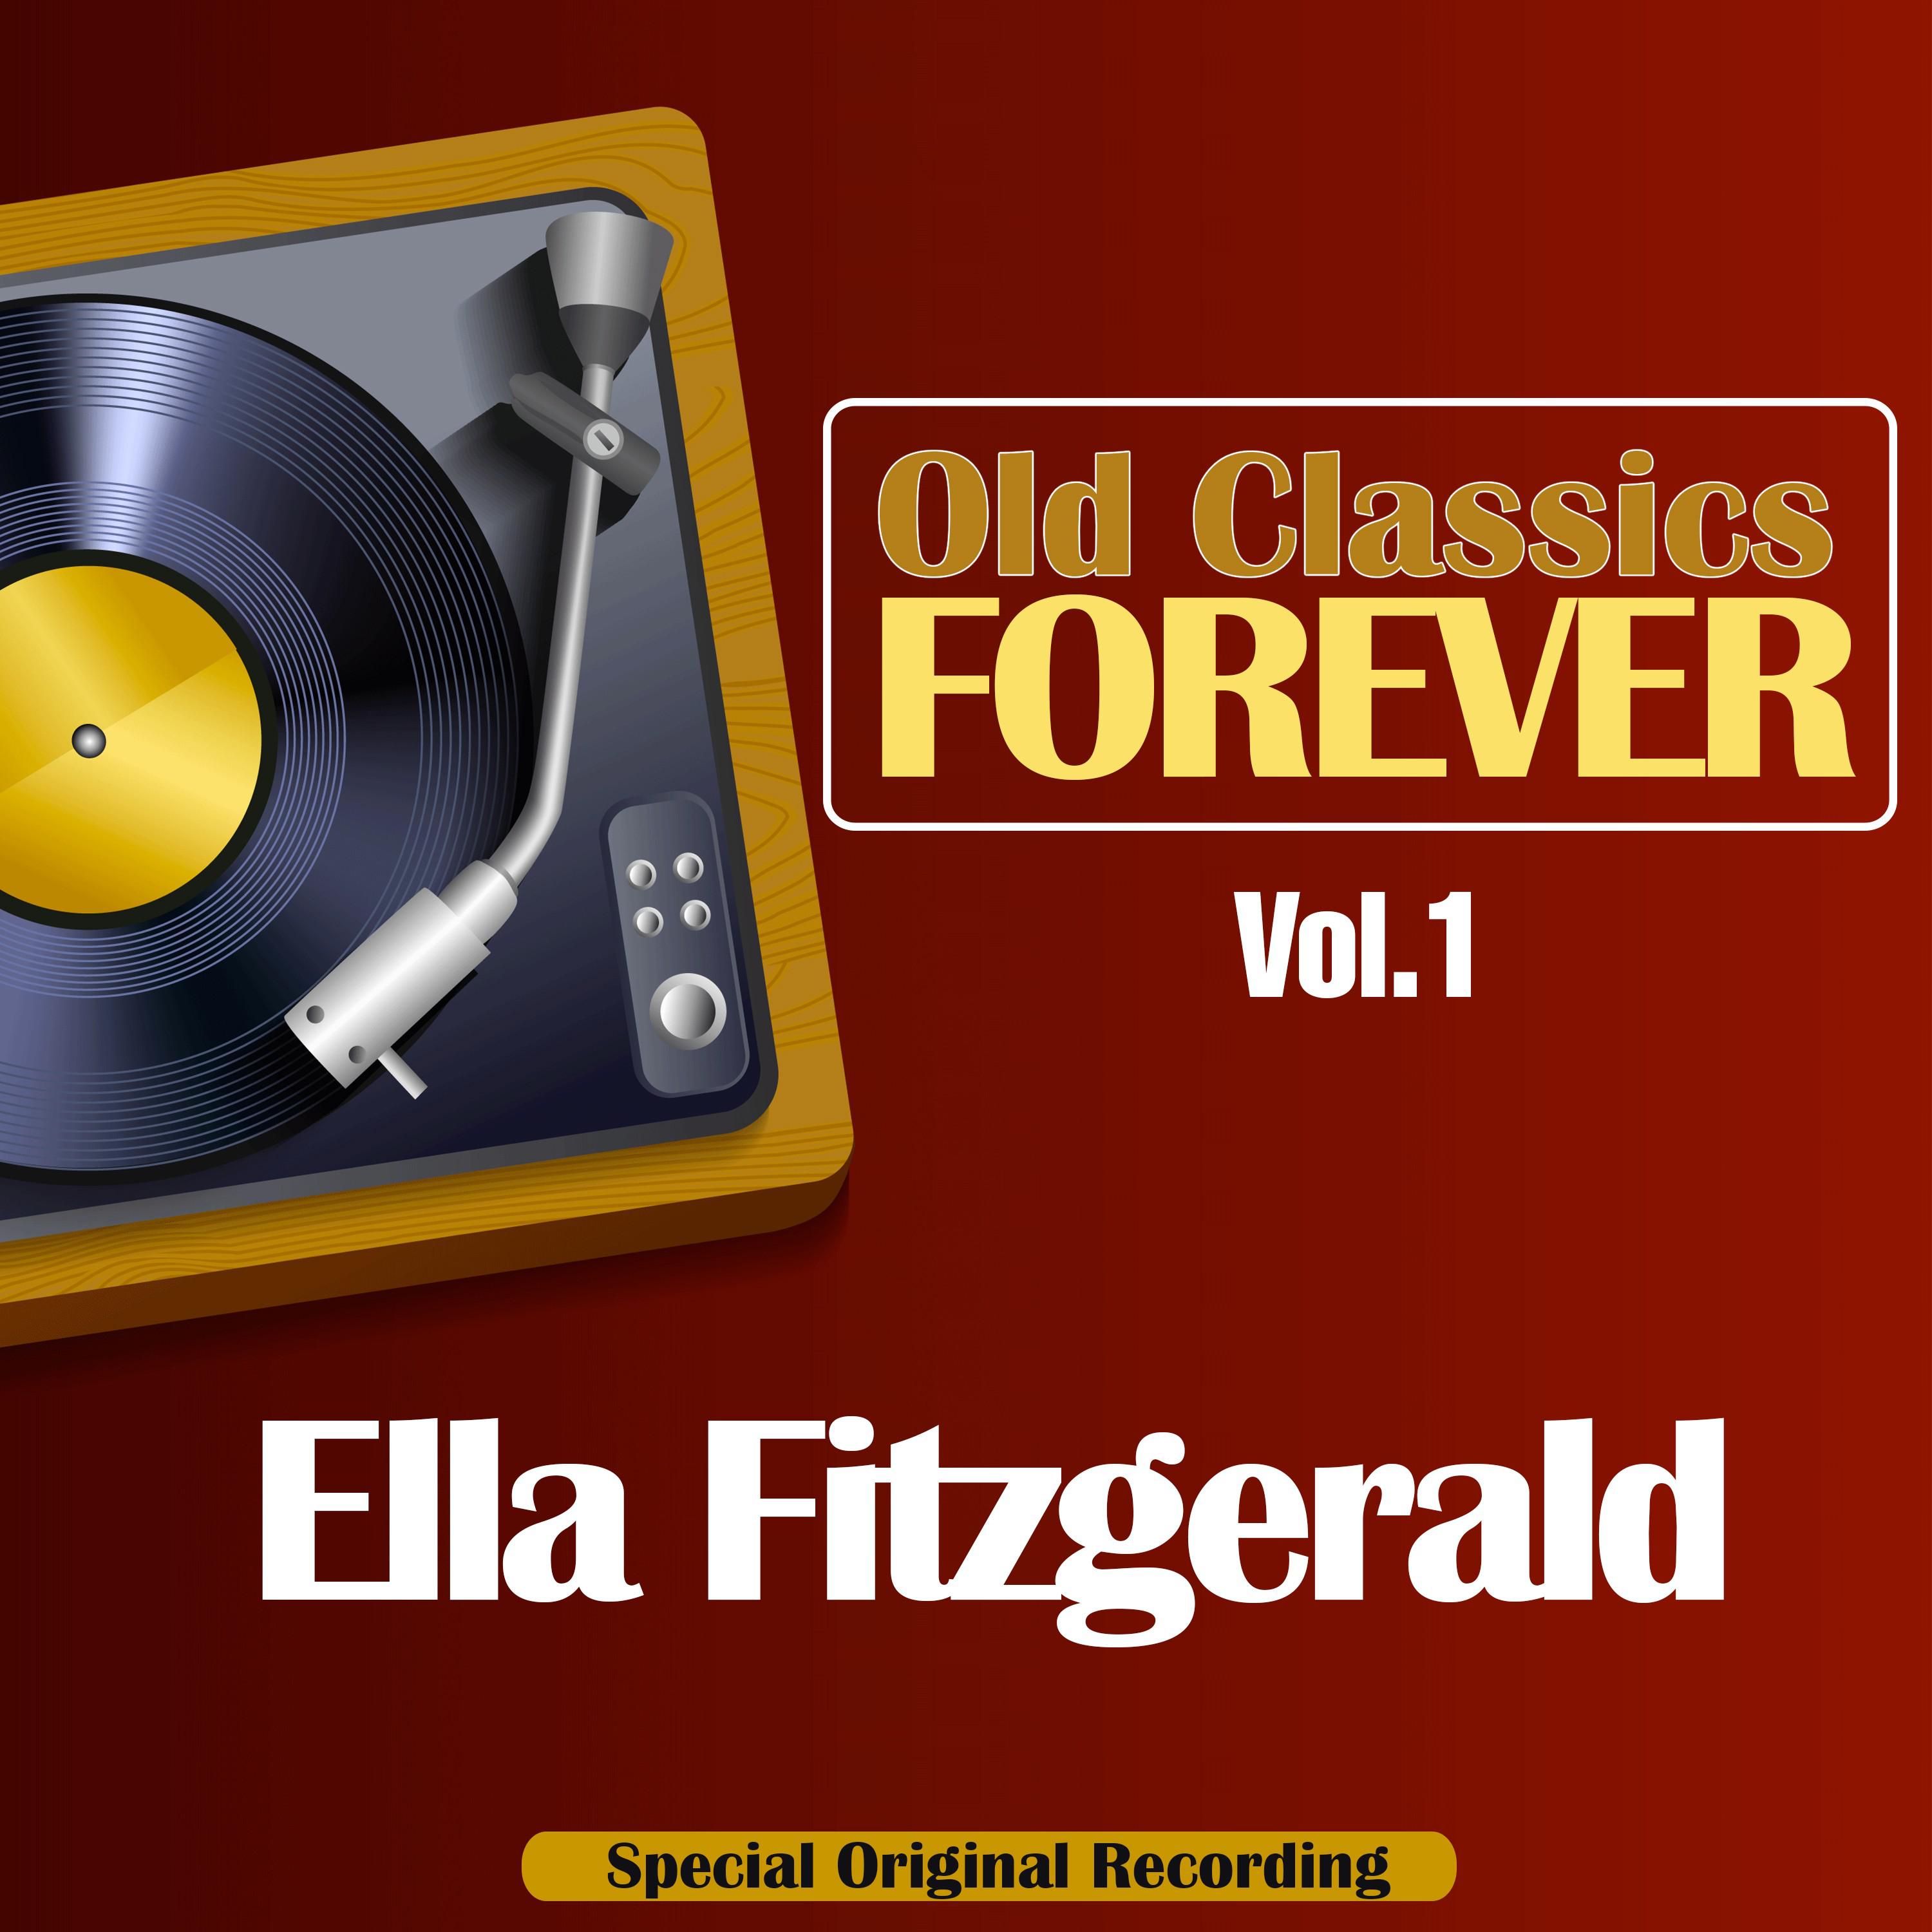 Old Classics Forever, Vol. 1 (Special Original Recording)